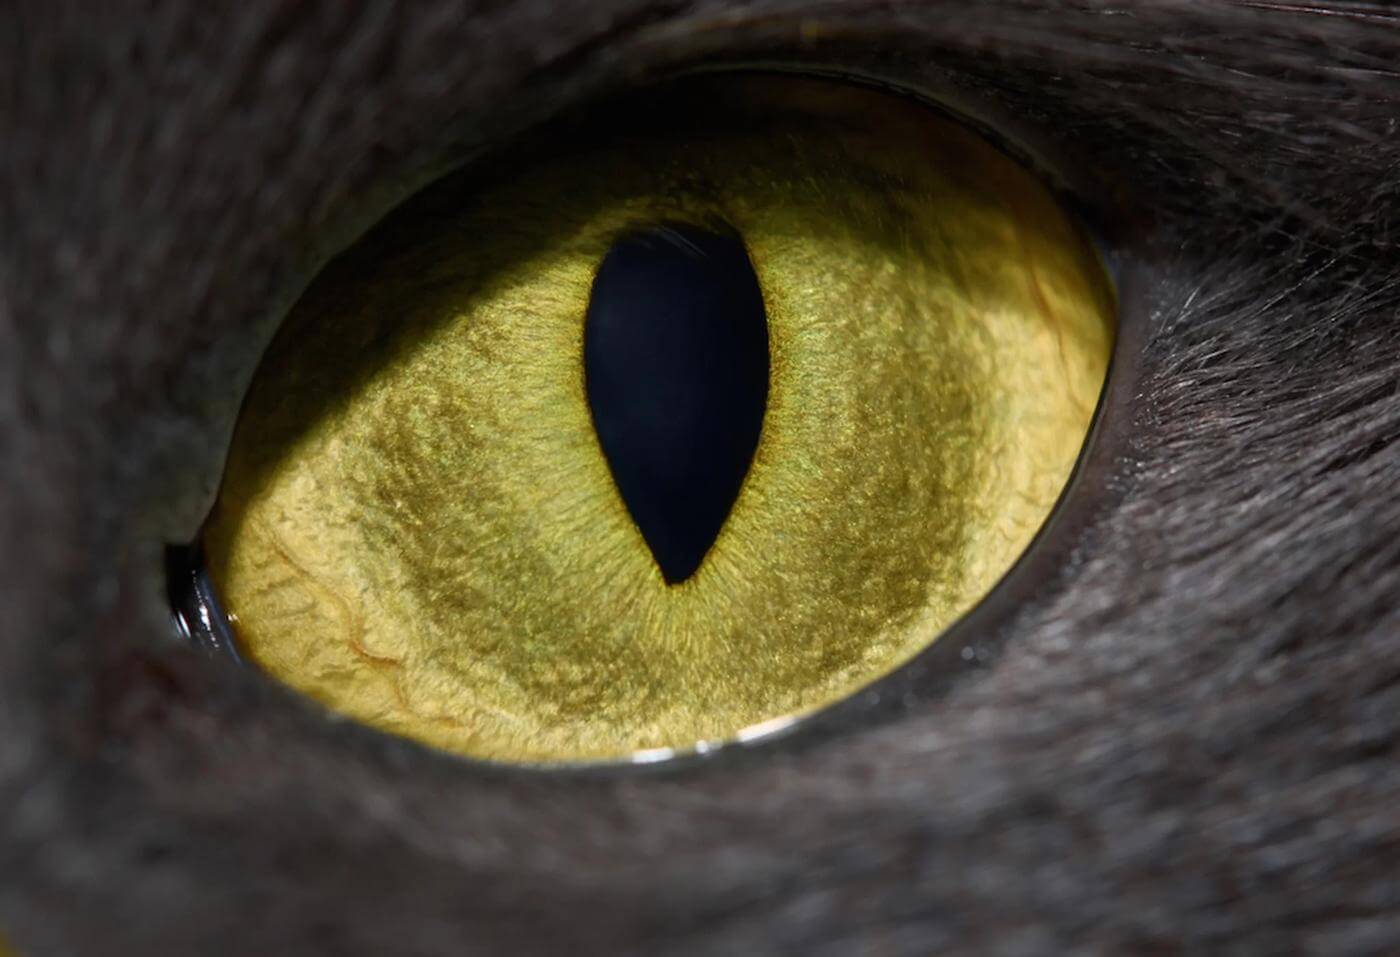 Kucing memiliki pupil berbentuk celah vertikal untuk memperkirakan jarak antara mereka dengan mangsanya